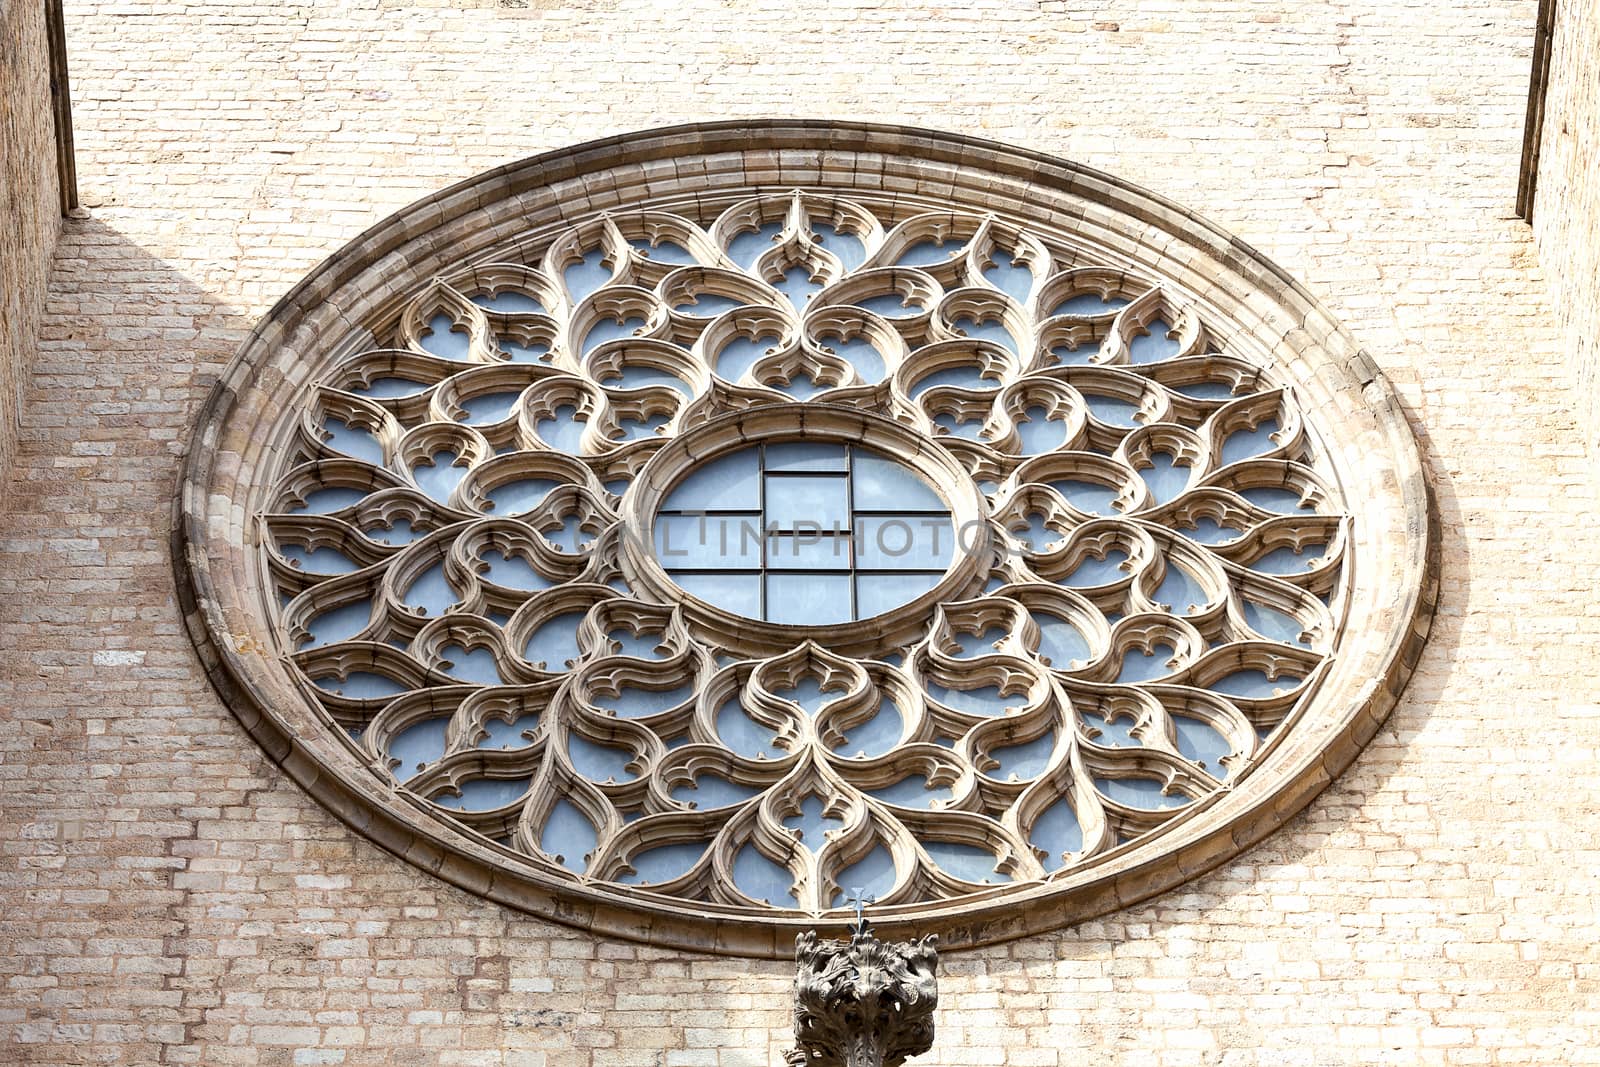 Rose window on facade of church Santa Maria del Mar, Barcelona, Spain by mychadre77